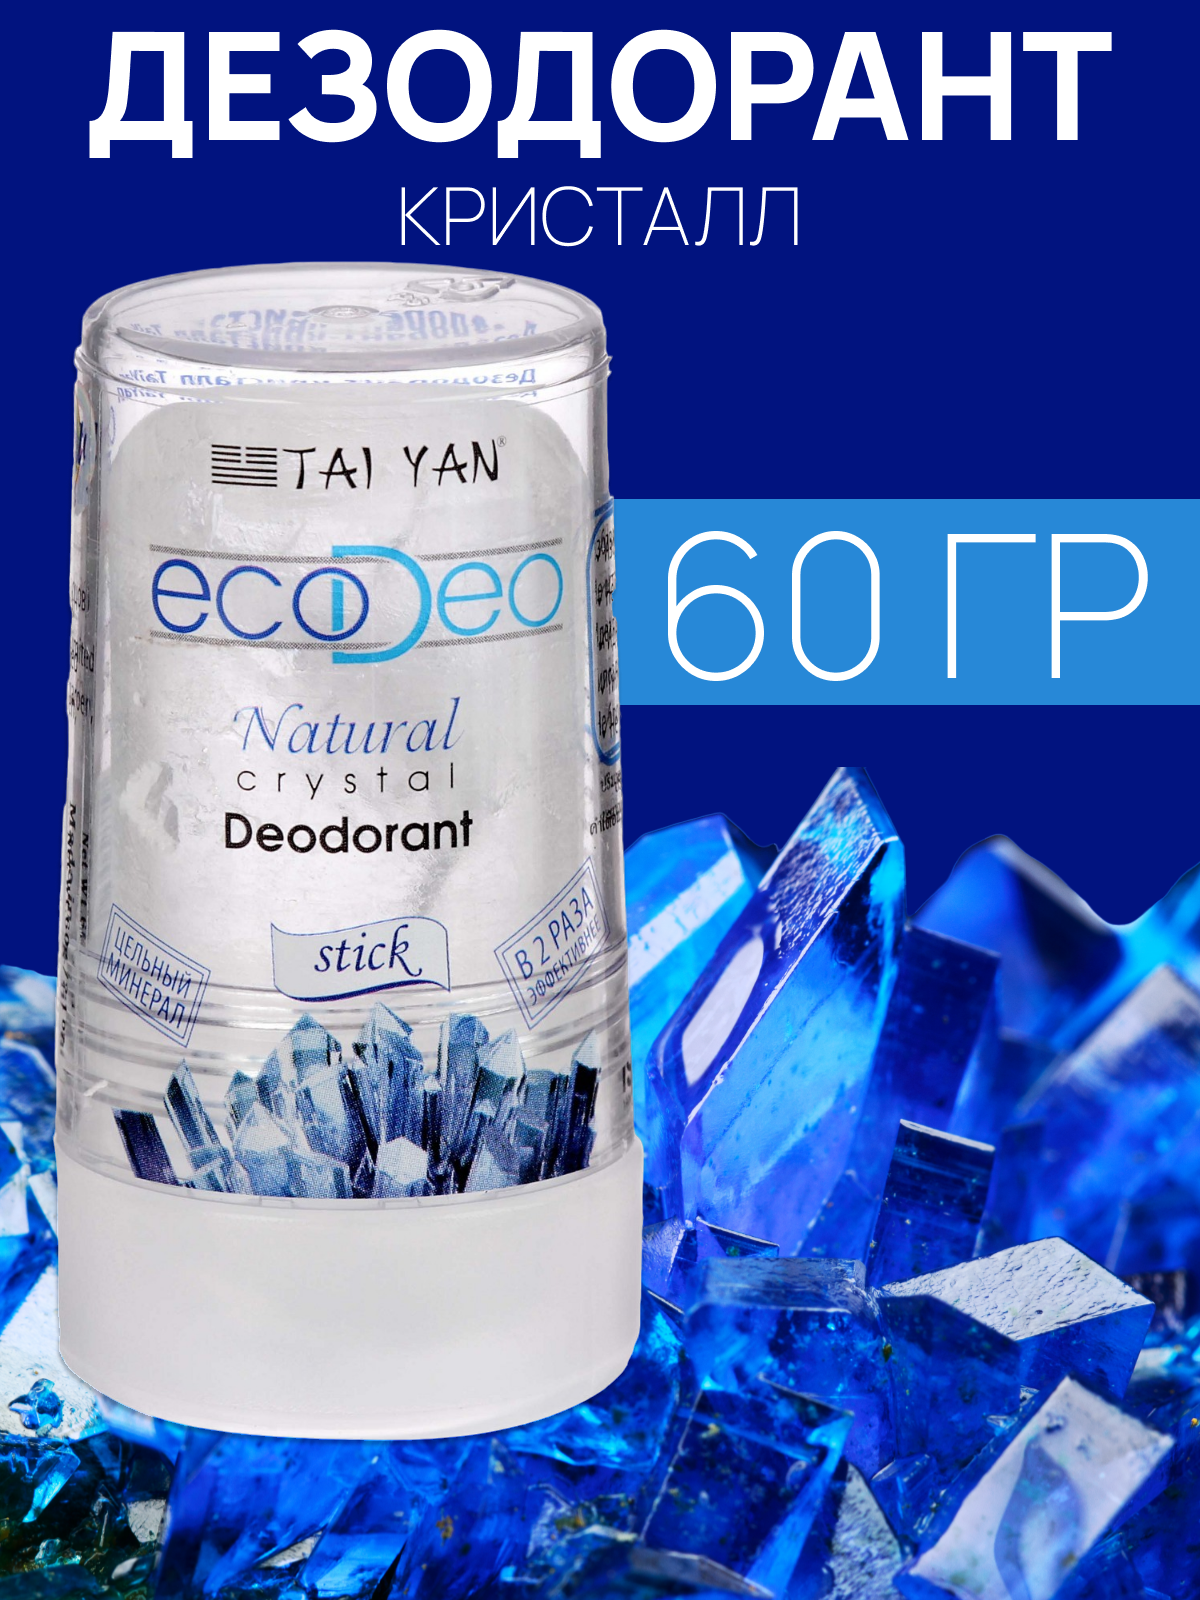 Дезодорант EcoDeo из цельного кристалла, 60 гр 3398102